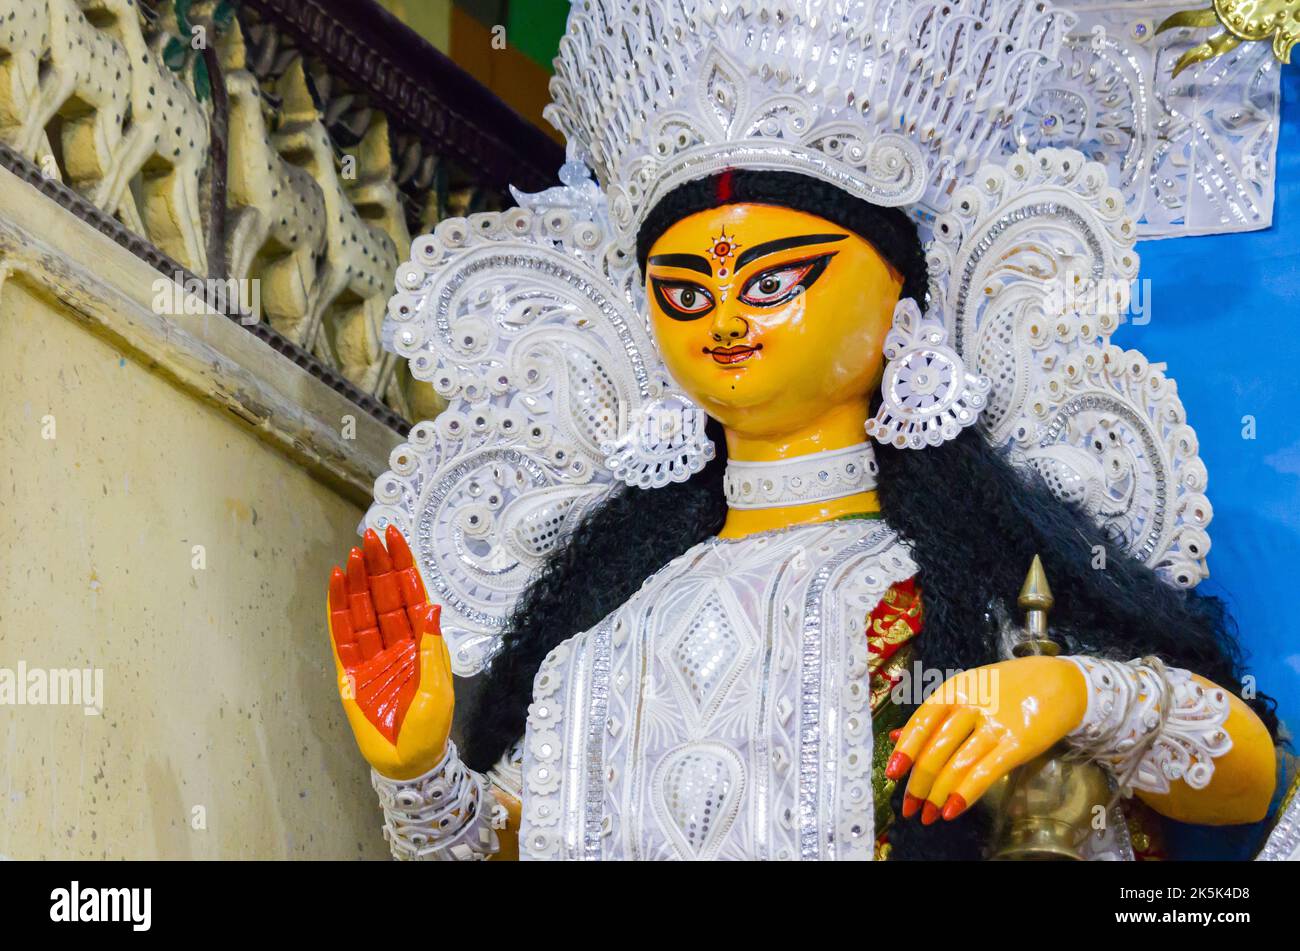 Pin by Probin Karmokar on Favourites | Saraswati devi, Hindu statues,  Saraswati goddess